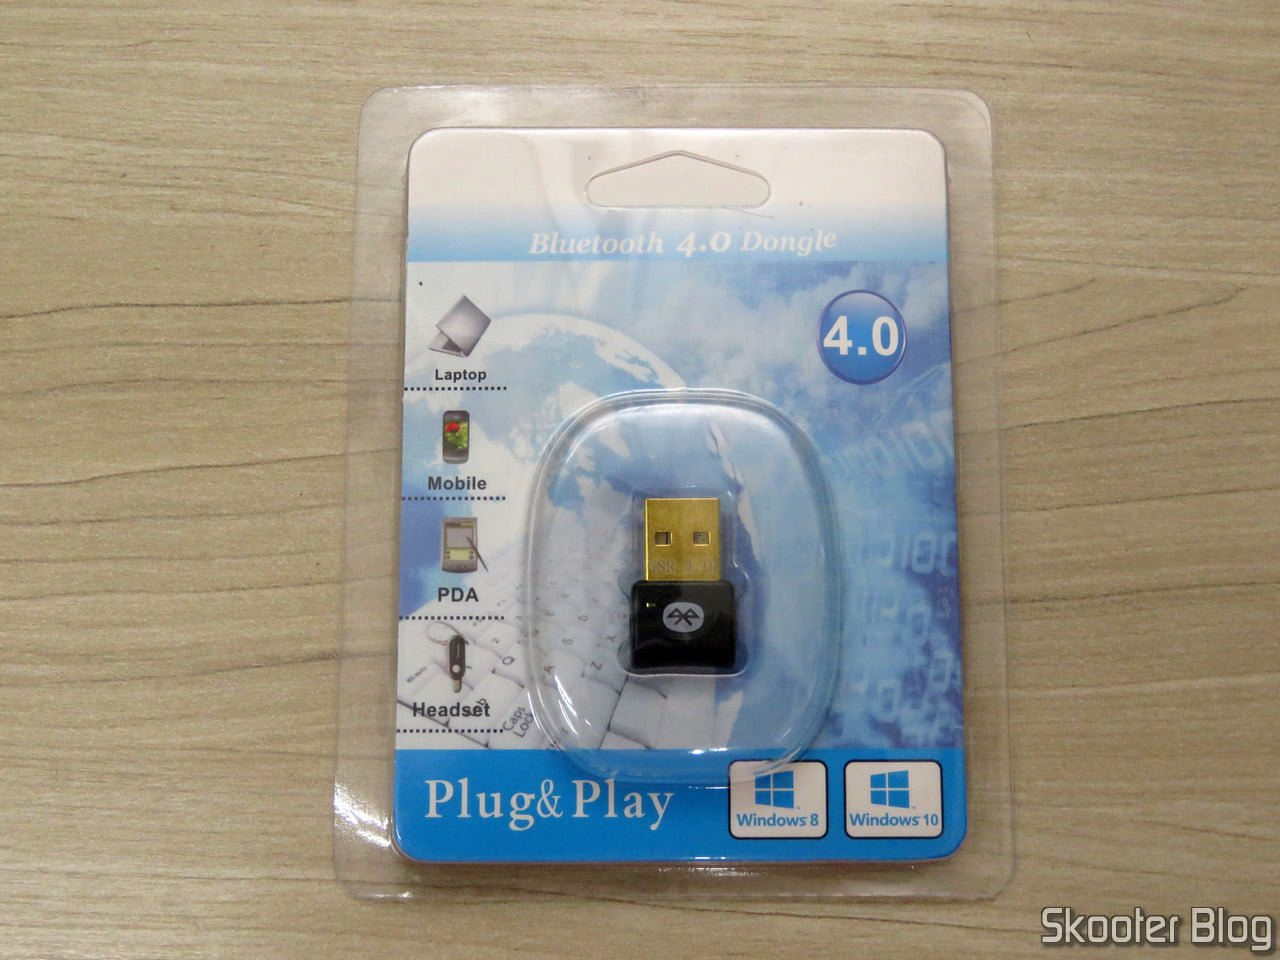 Review] Mini Adaptador Bluetooth CSR Dongle embalagem original - Americanas - USBVID_0A12&PID_0001&REV_2520 - Skooter Blog